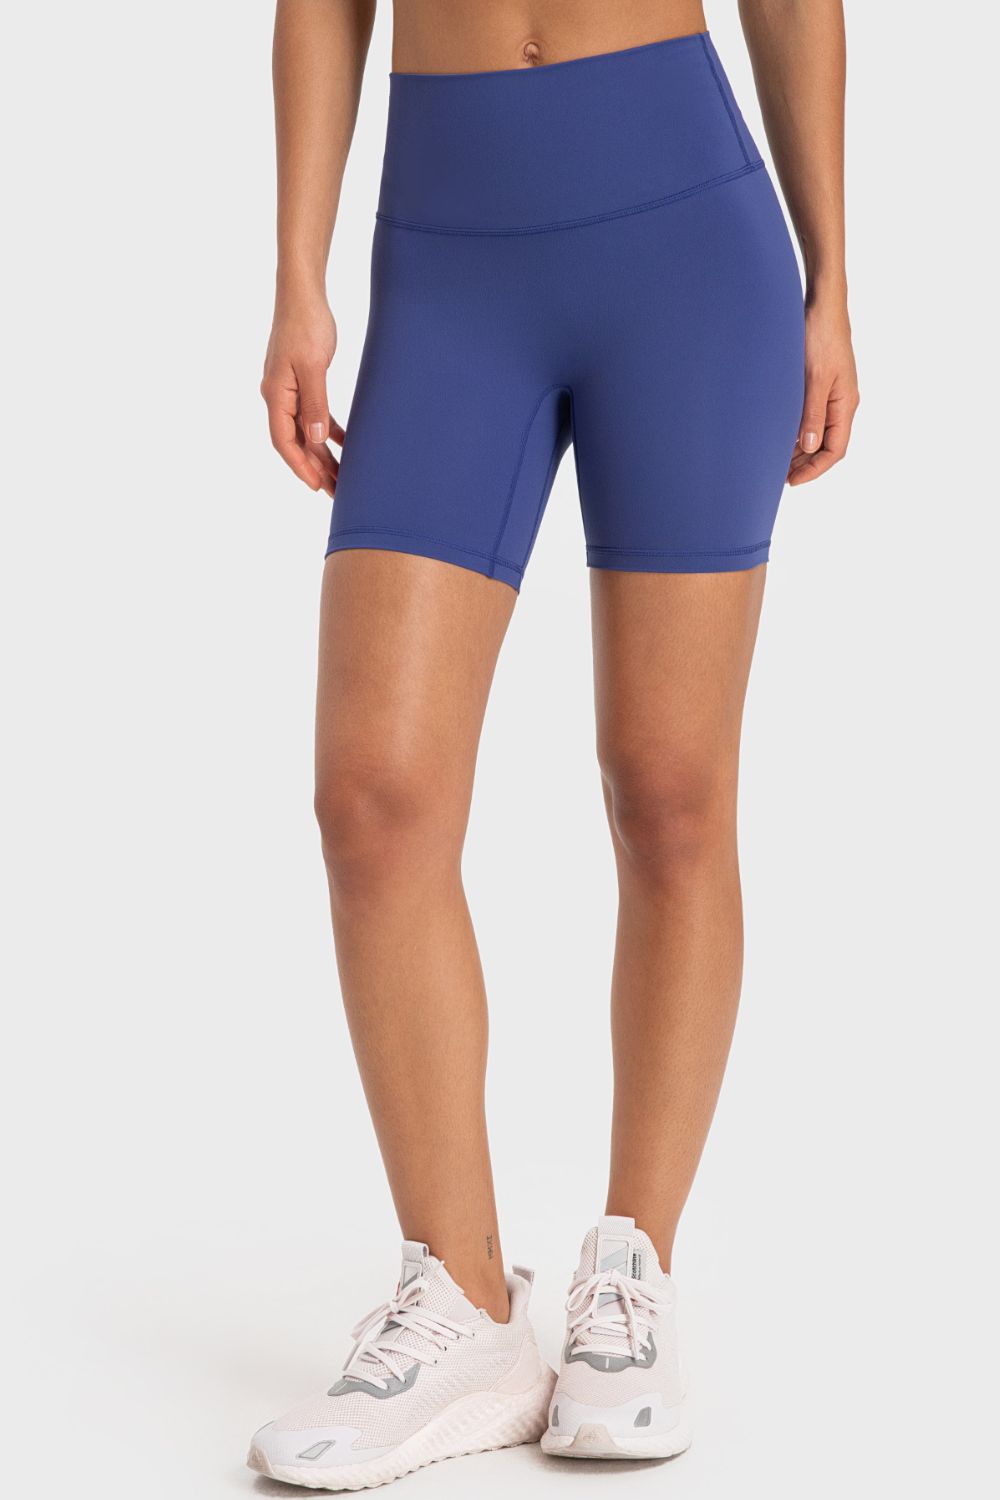 Mid-Leg Biker Shorts